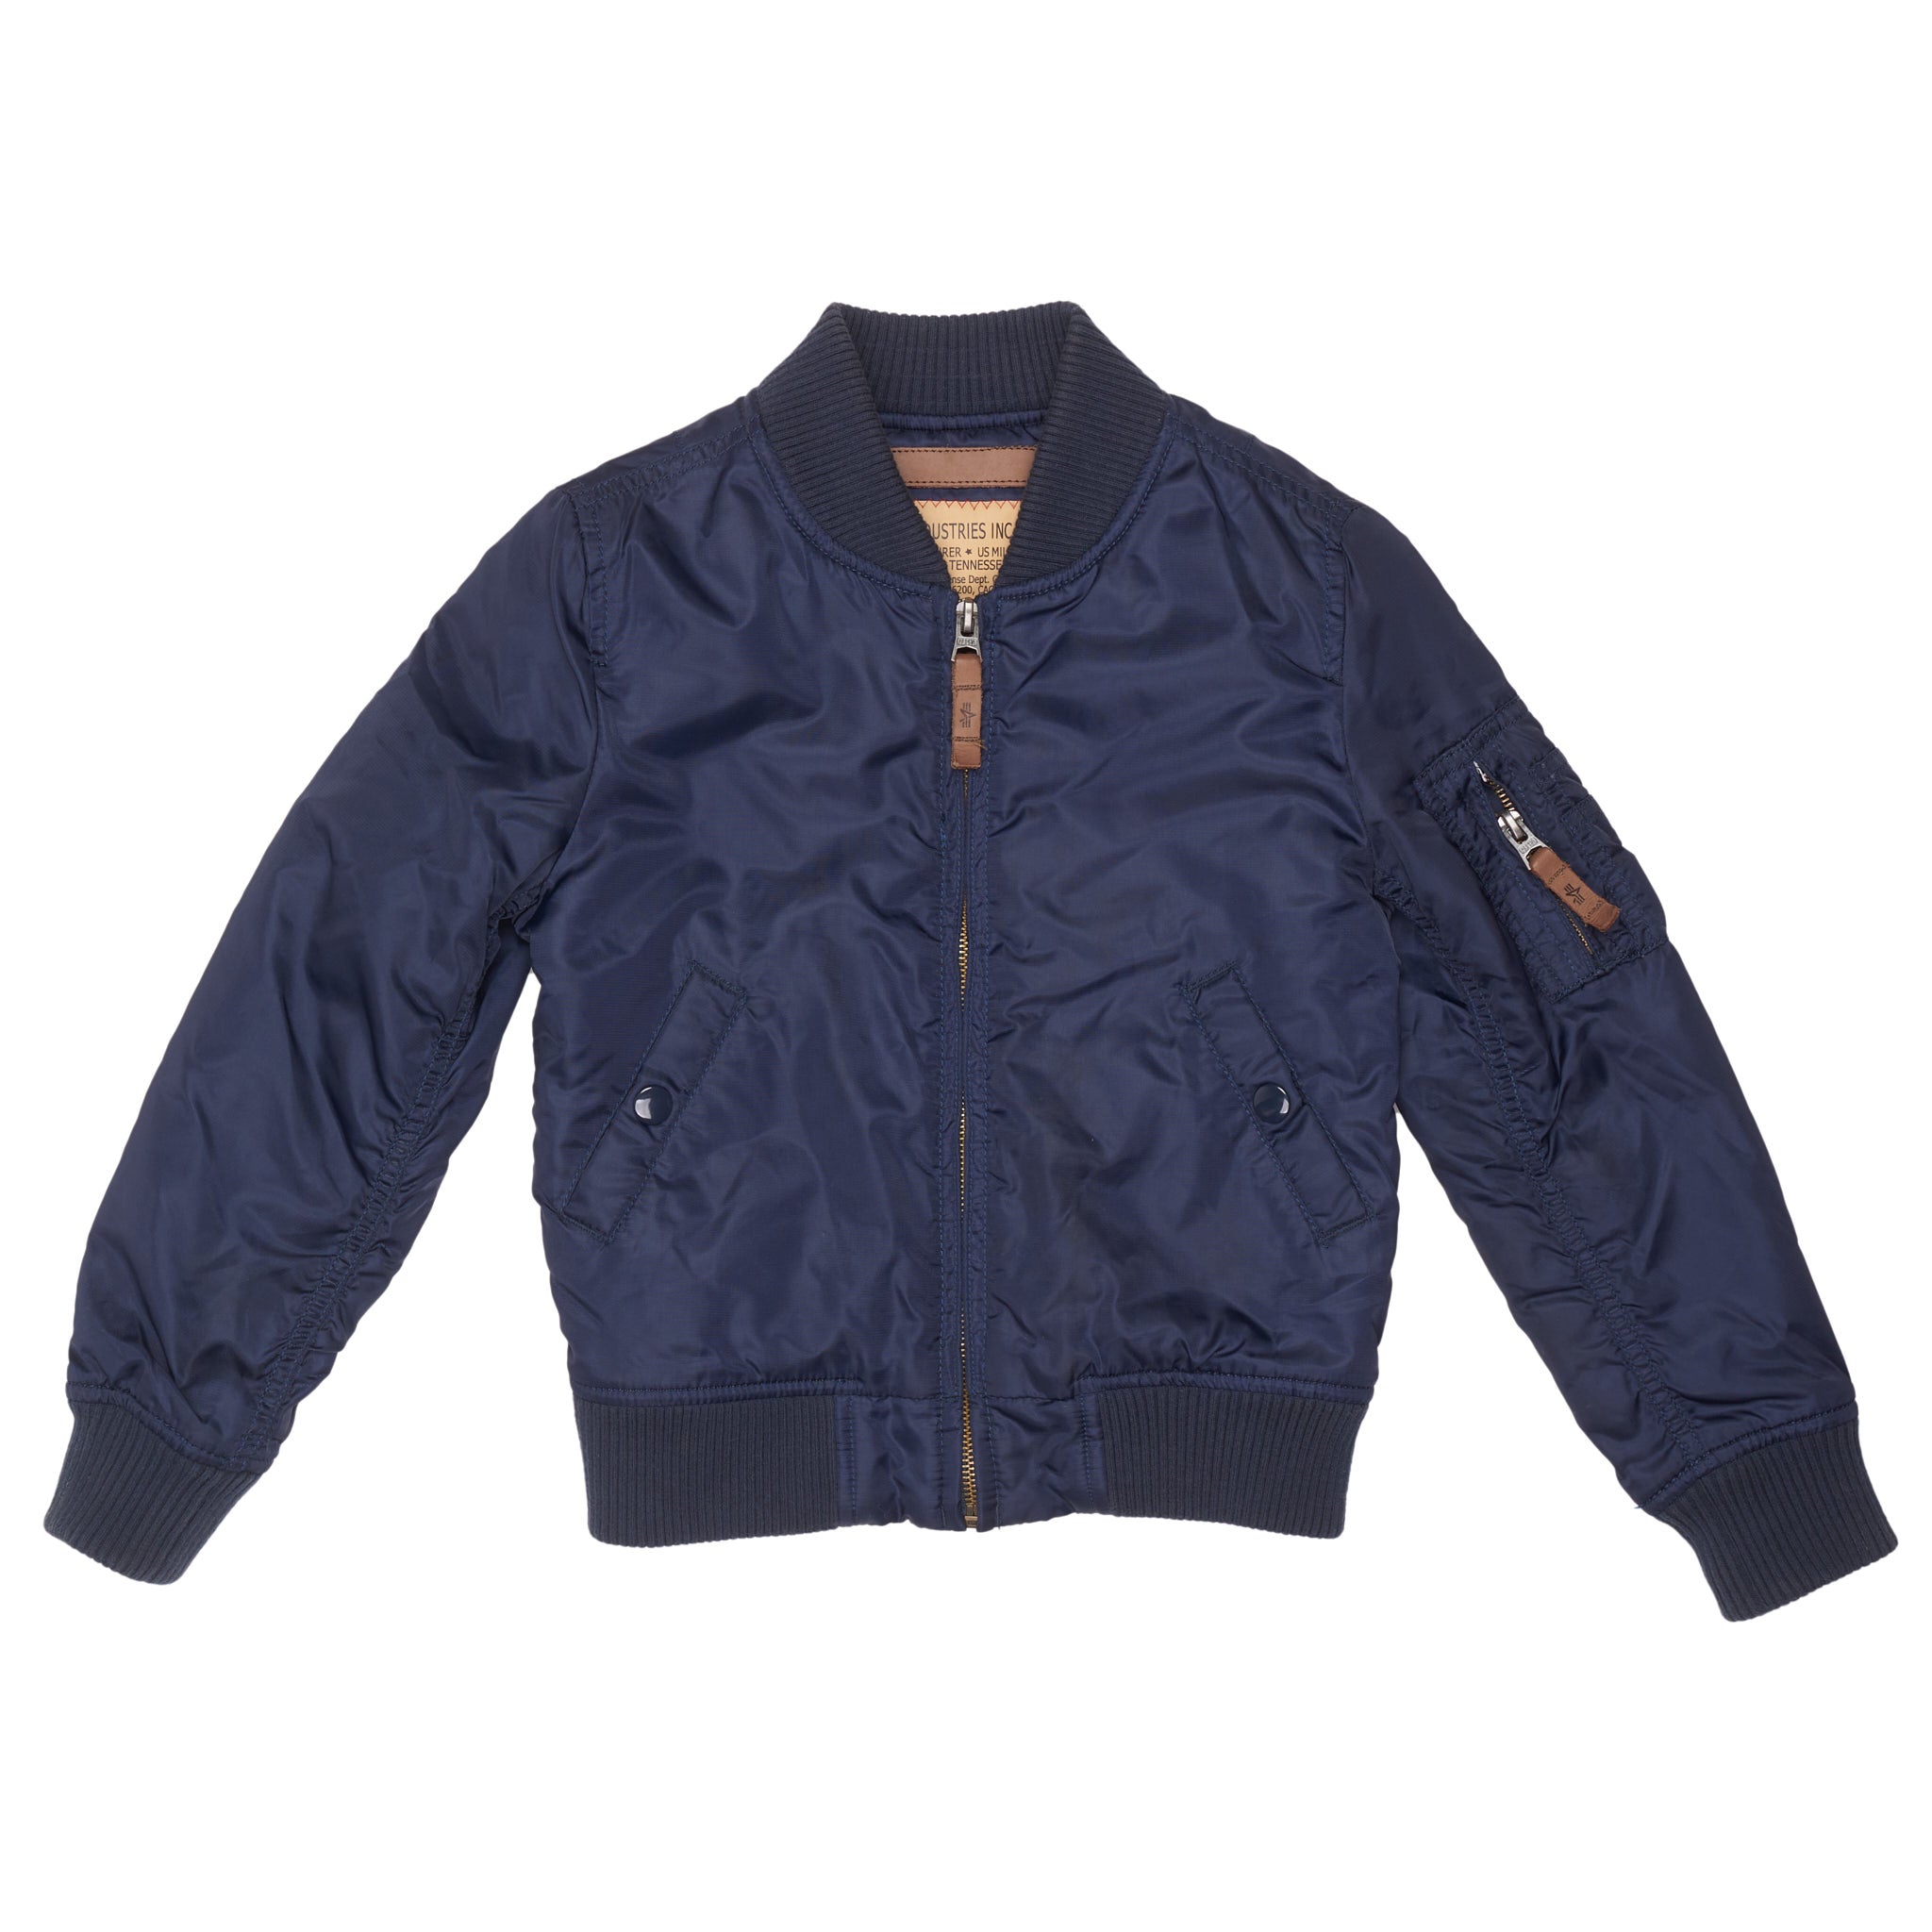 ALPHA INDUSTRIES Blue Nylon Children Boy's Bomber Flight Jacket Coat Size 5/6